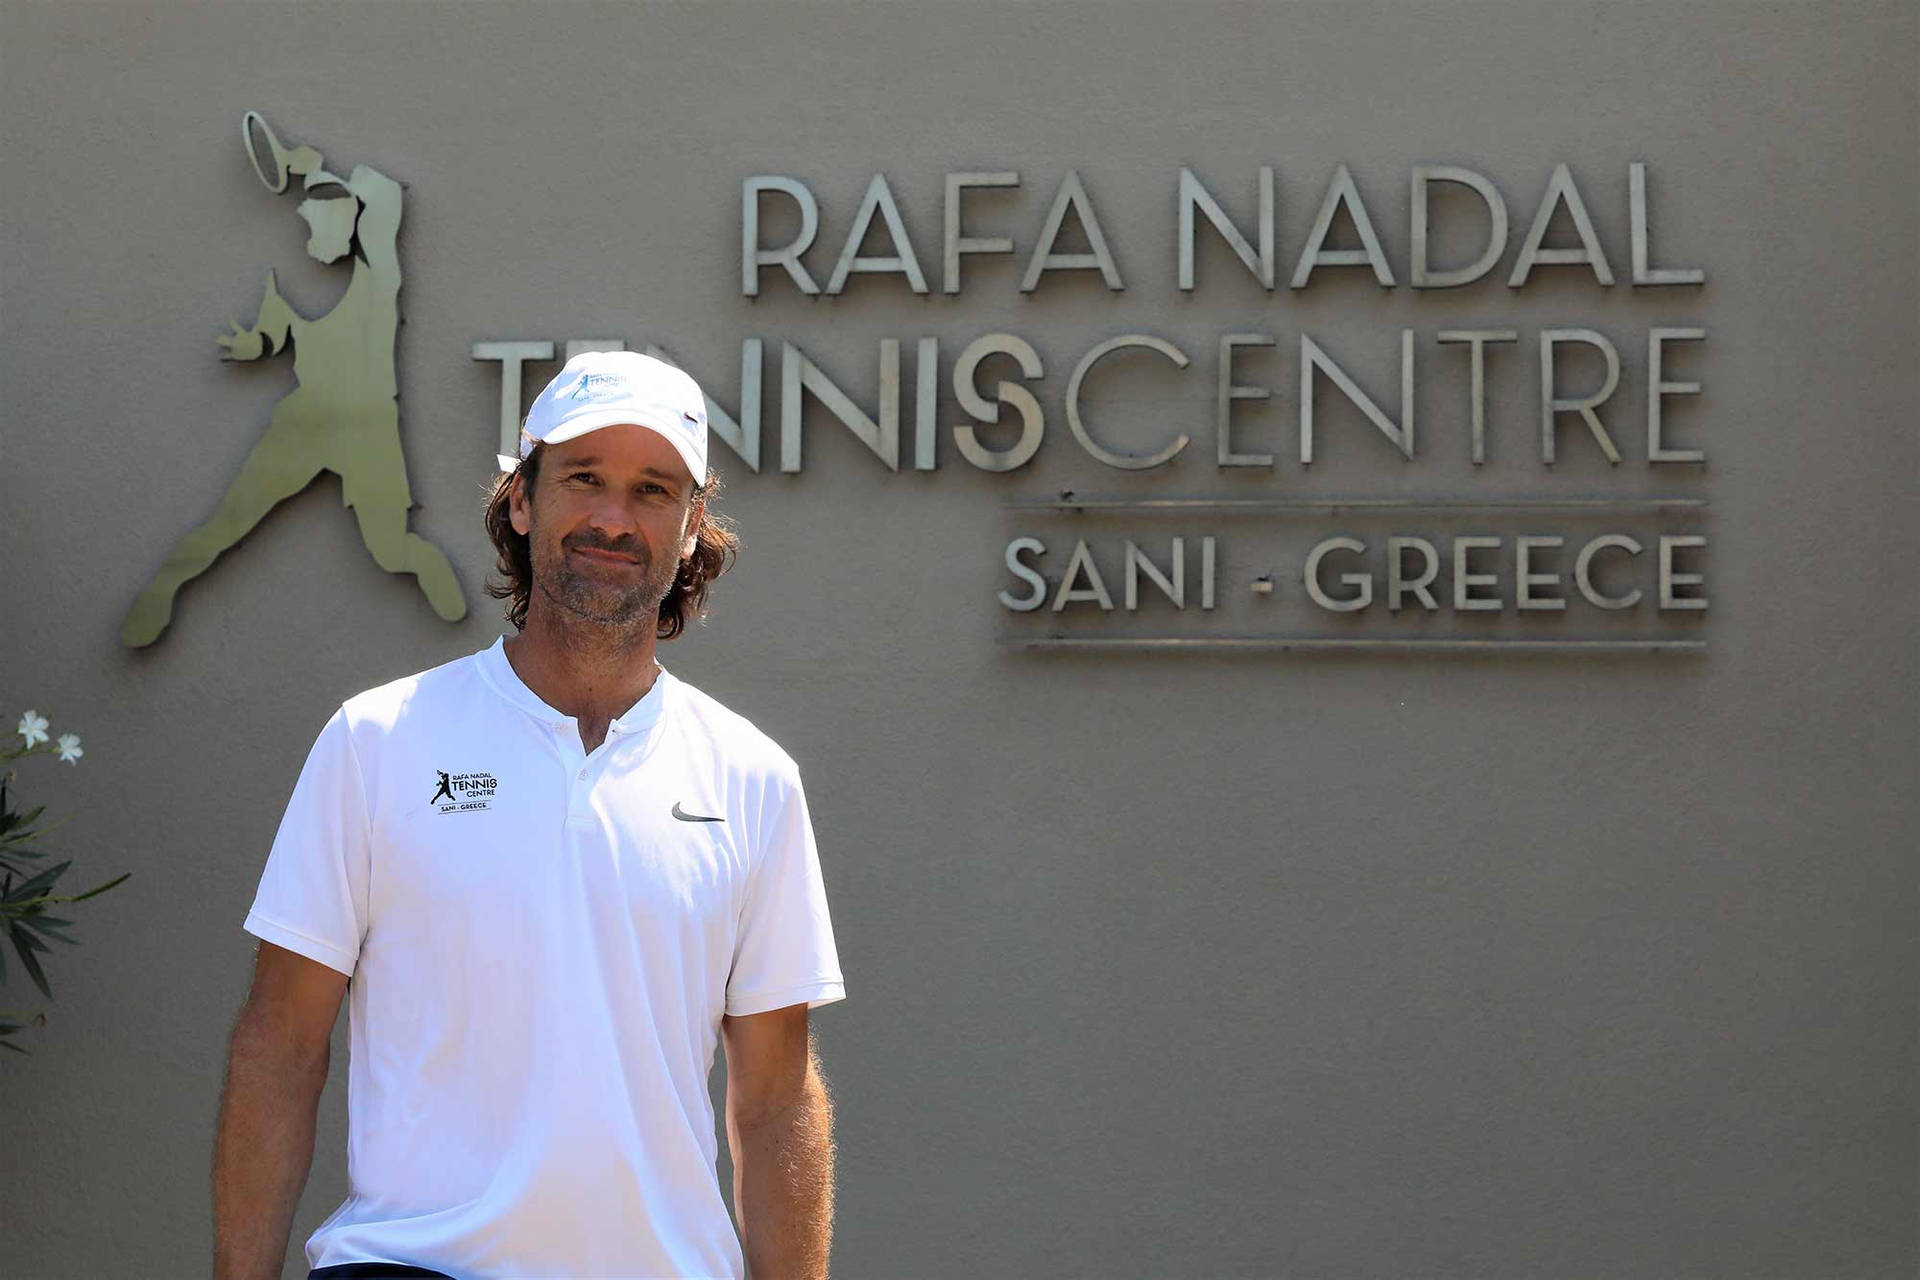 - Carlos Moya Rafa Nadal Tennis Centre Wallpaper